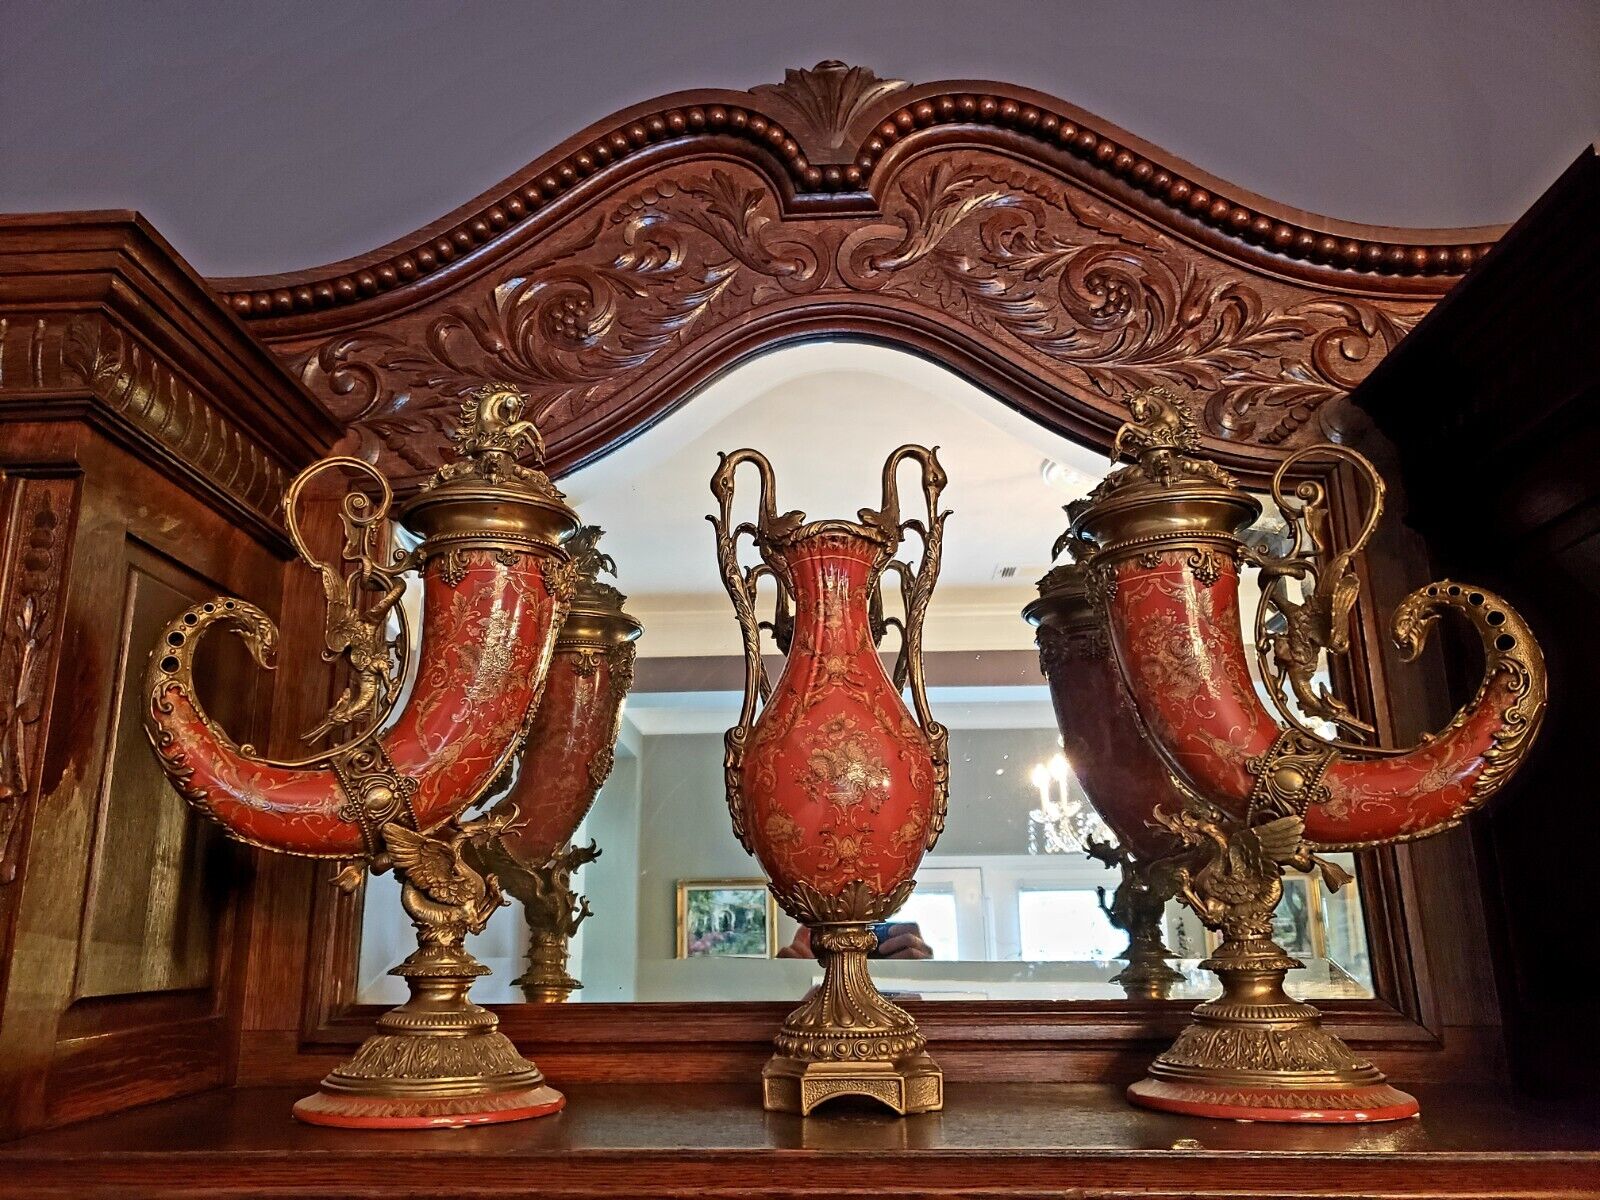 Set of 3 - Mark Roberts design and creation - Unique Cornucopia's and vase